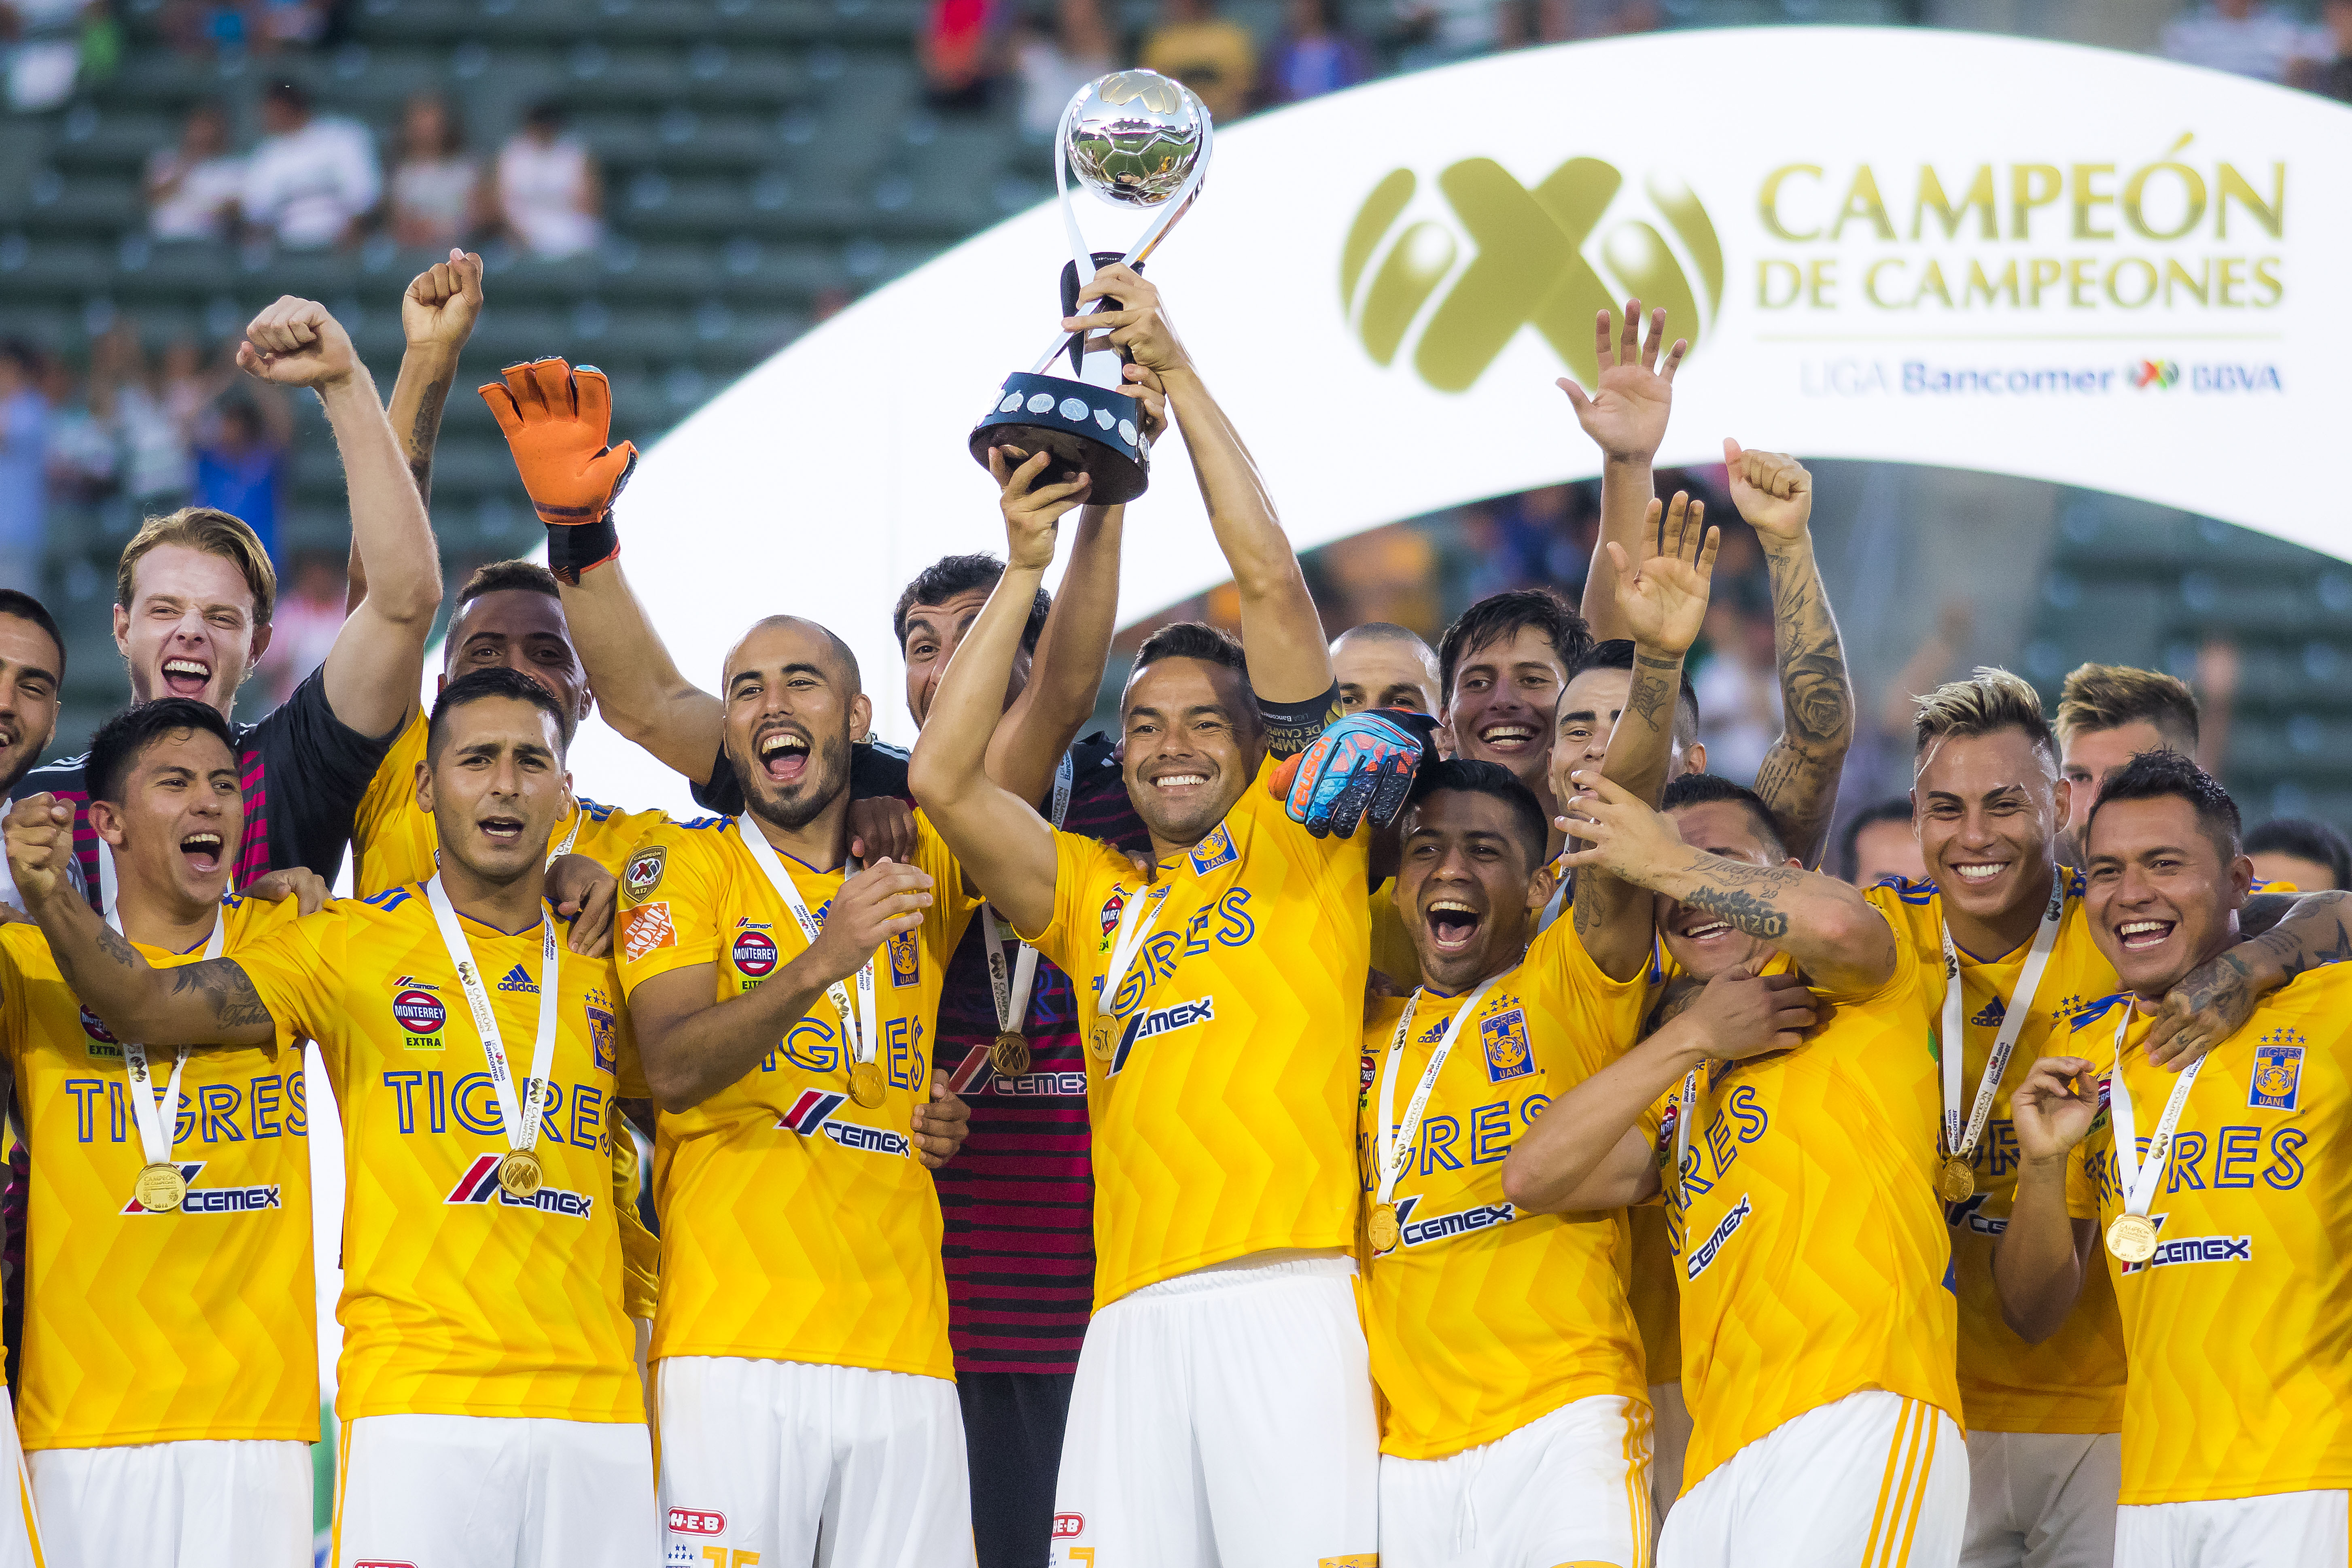 Tigres Campeon Vs Santos / Onkkucxhhumbcm : Showing all 1 it